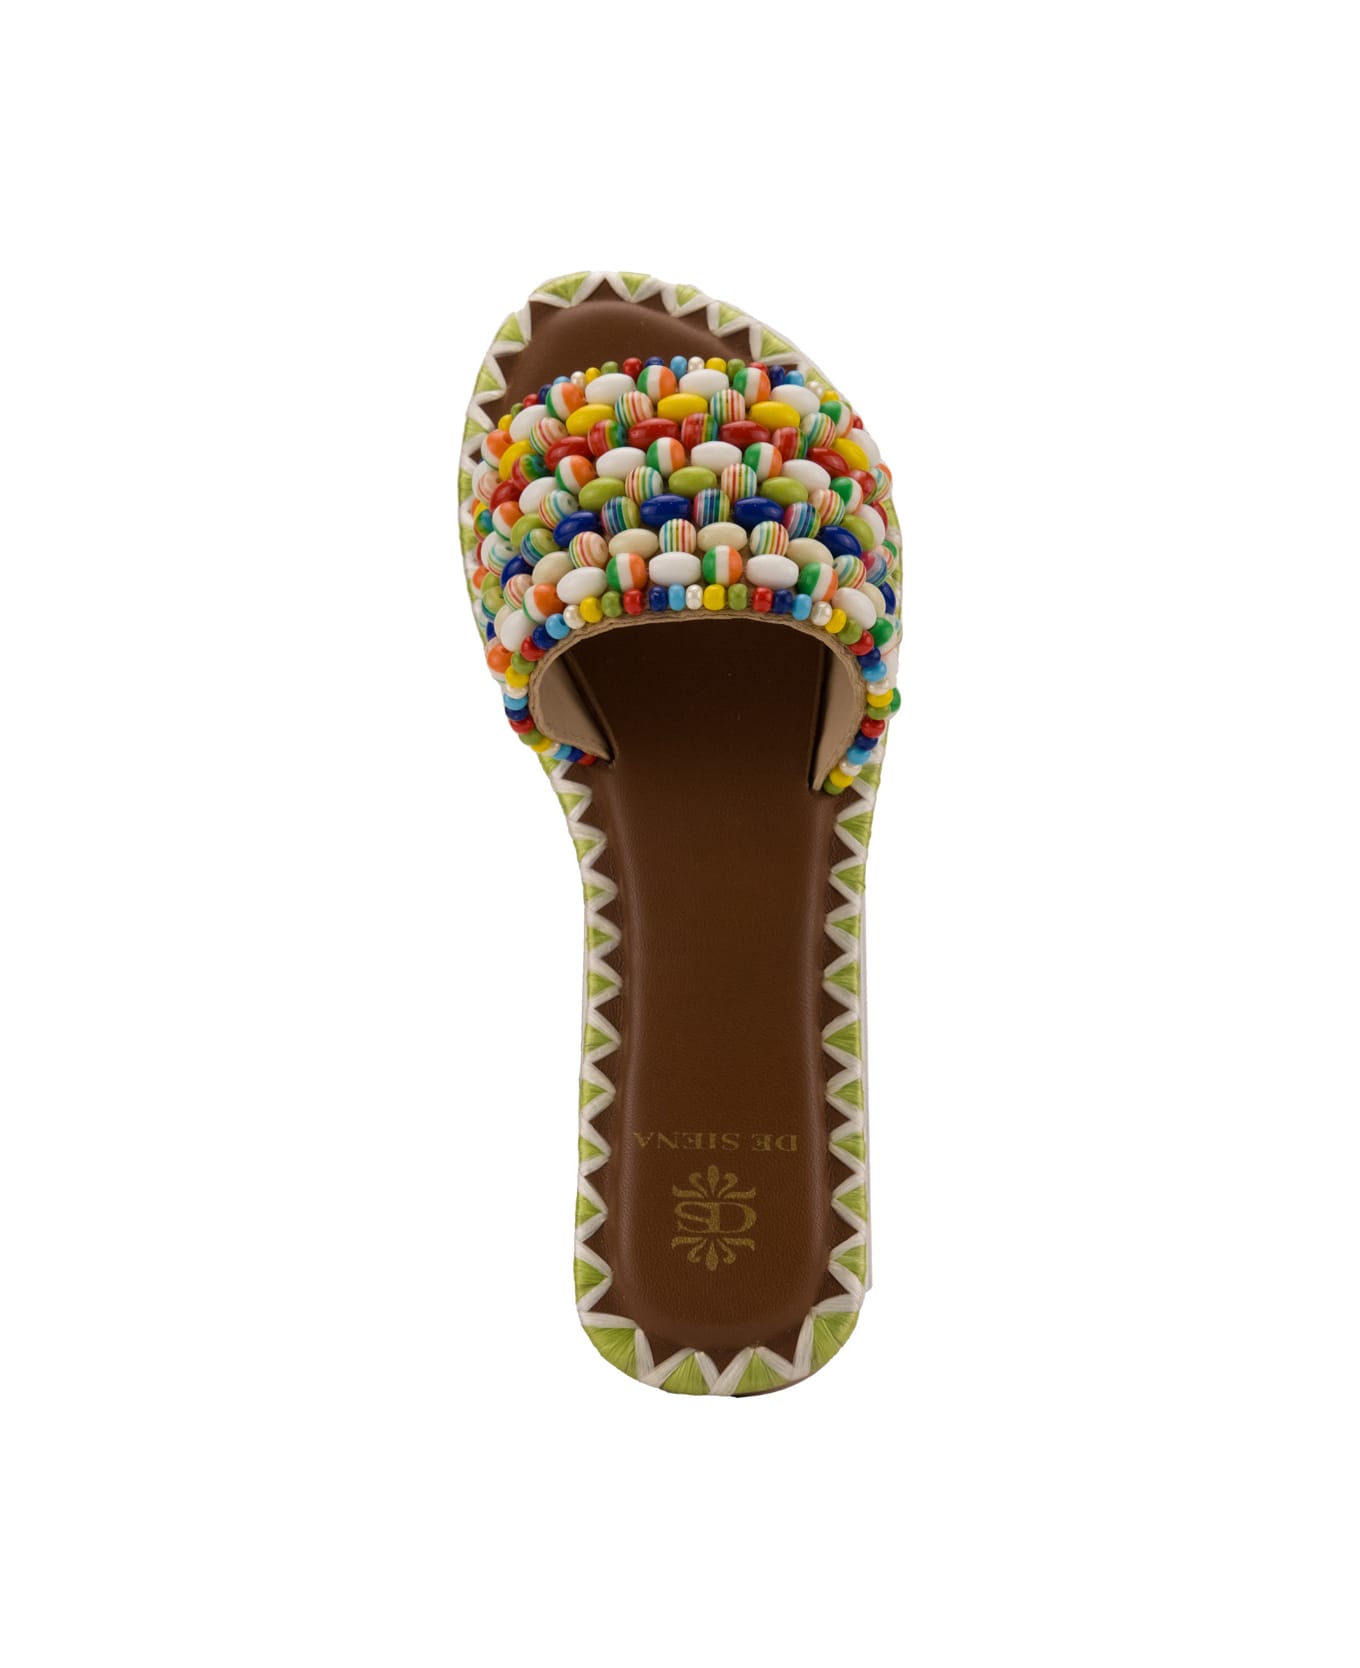 De Siena Belinda Sandals With Beads - Multicolor サンダル